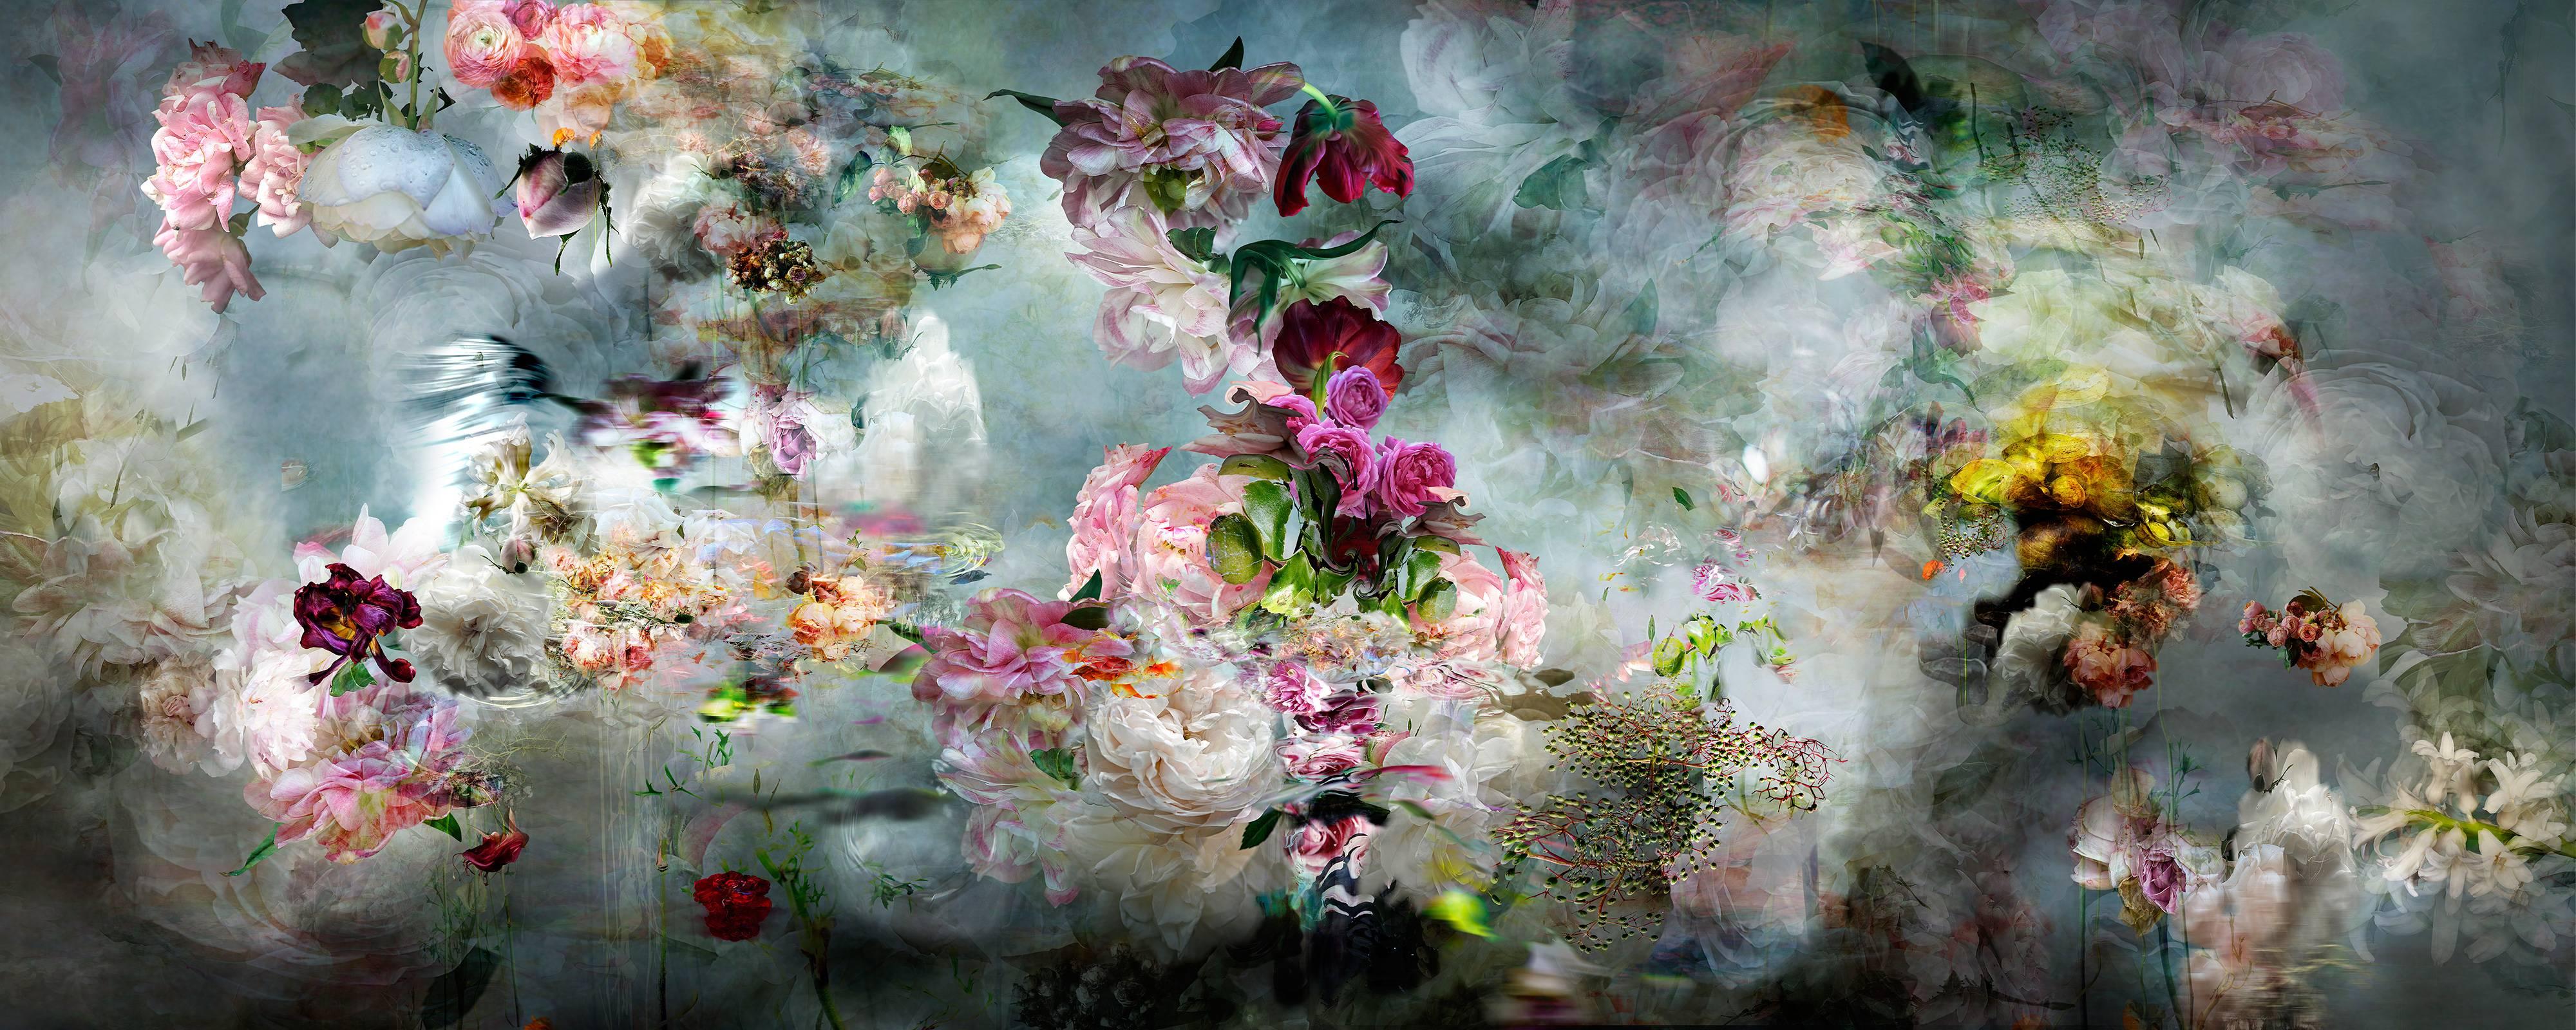 Isabelle Menin Abstract Photograph – Song for dead heroes #4 florales abstraktes Landschaftsstillleben mit Blumenfoto